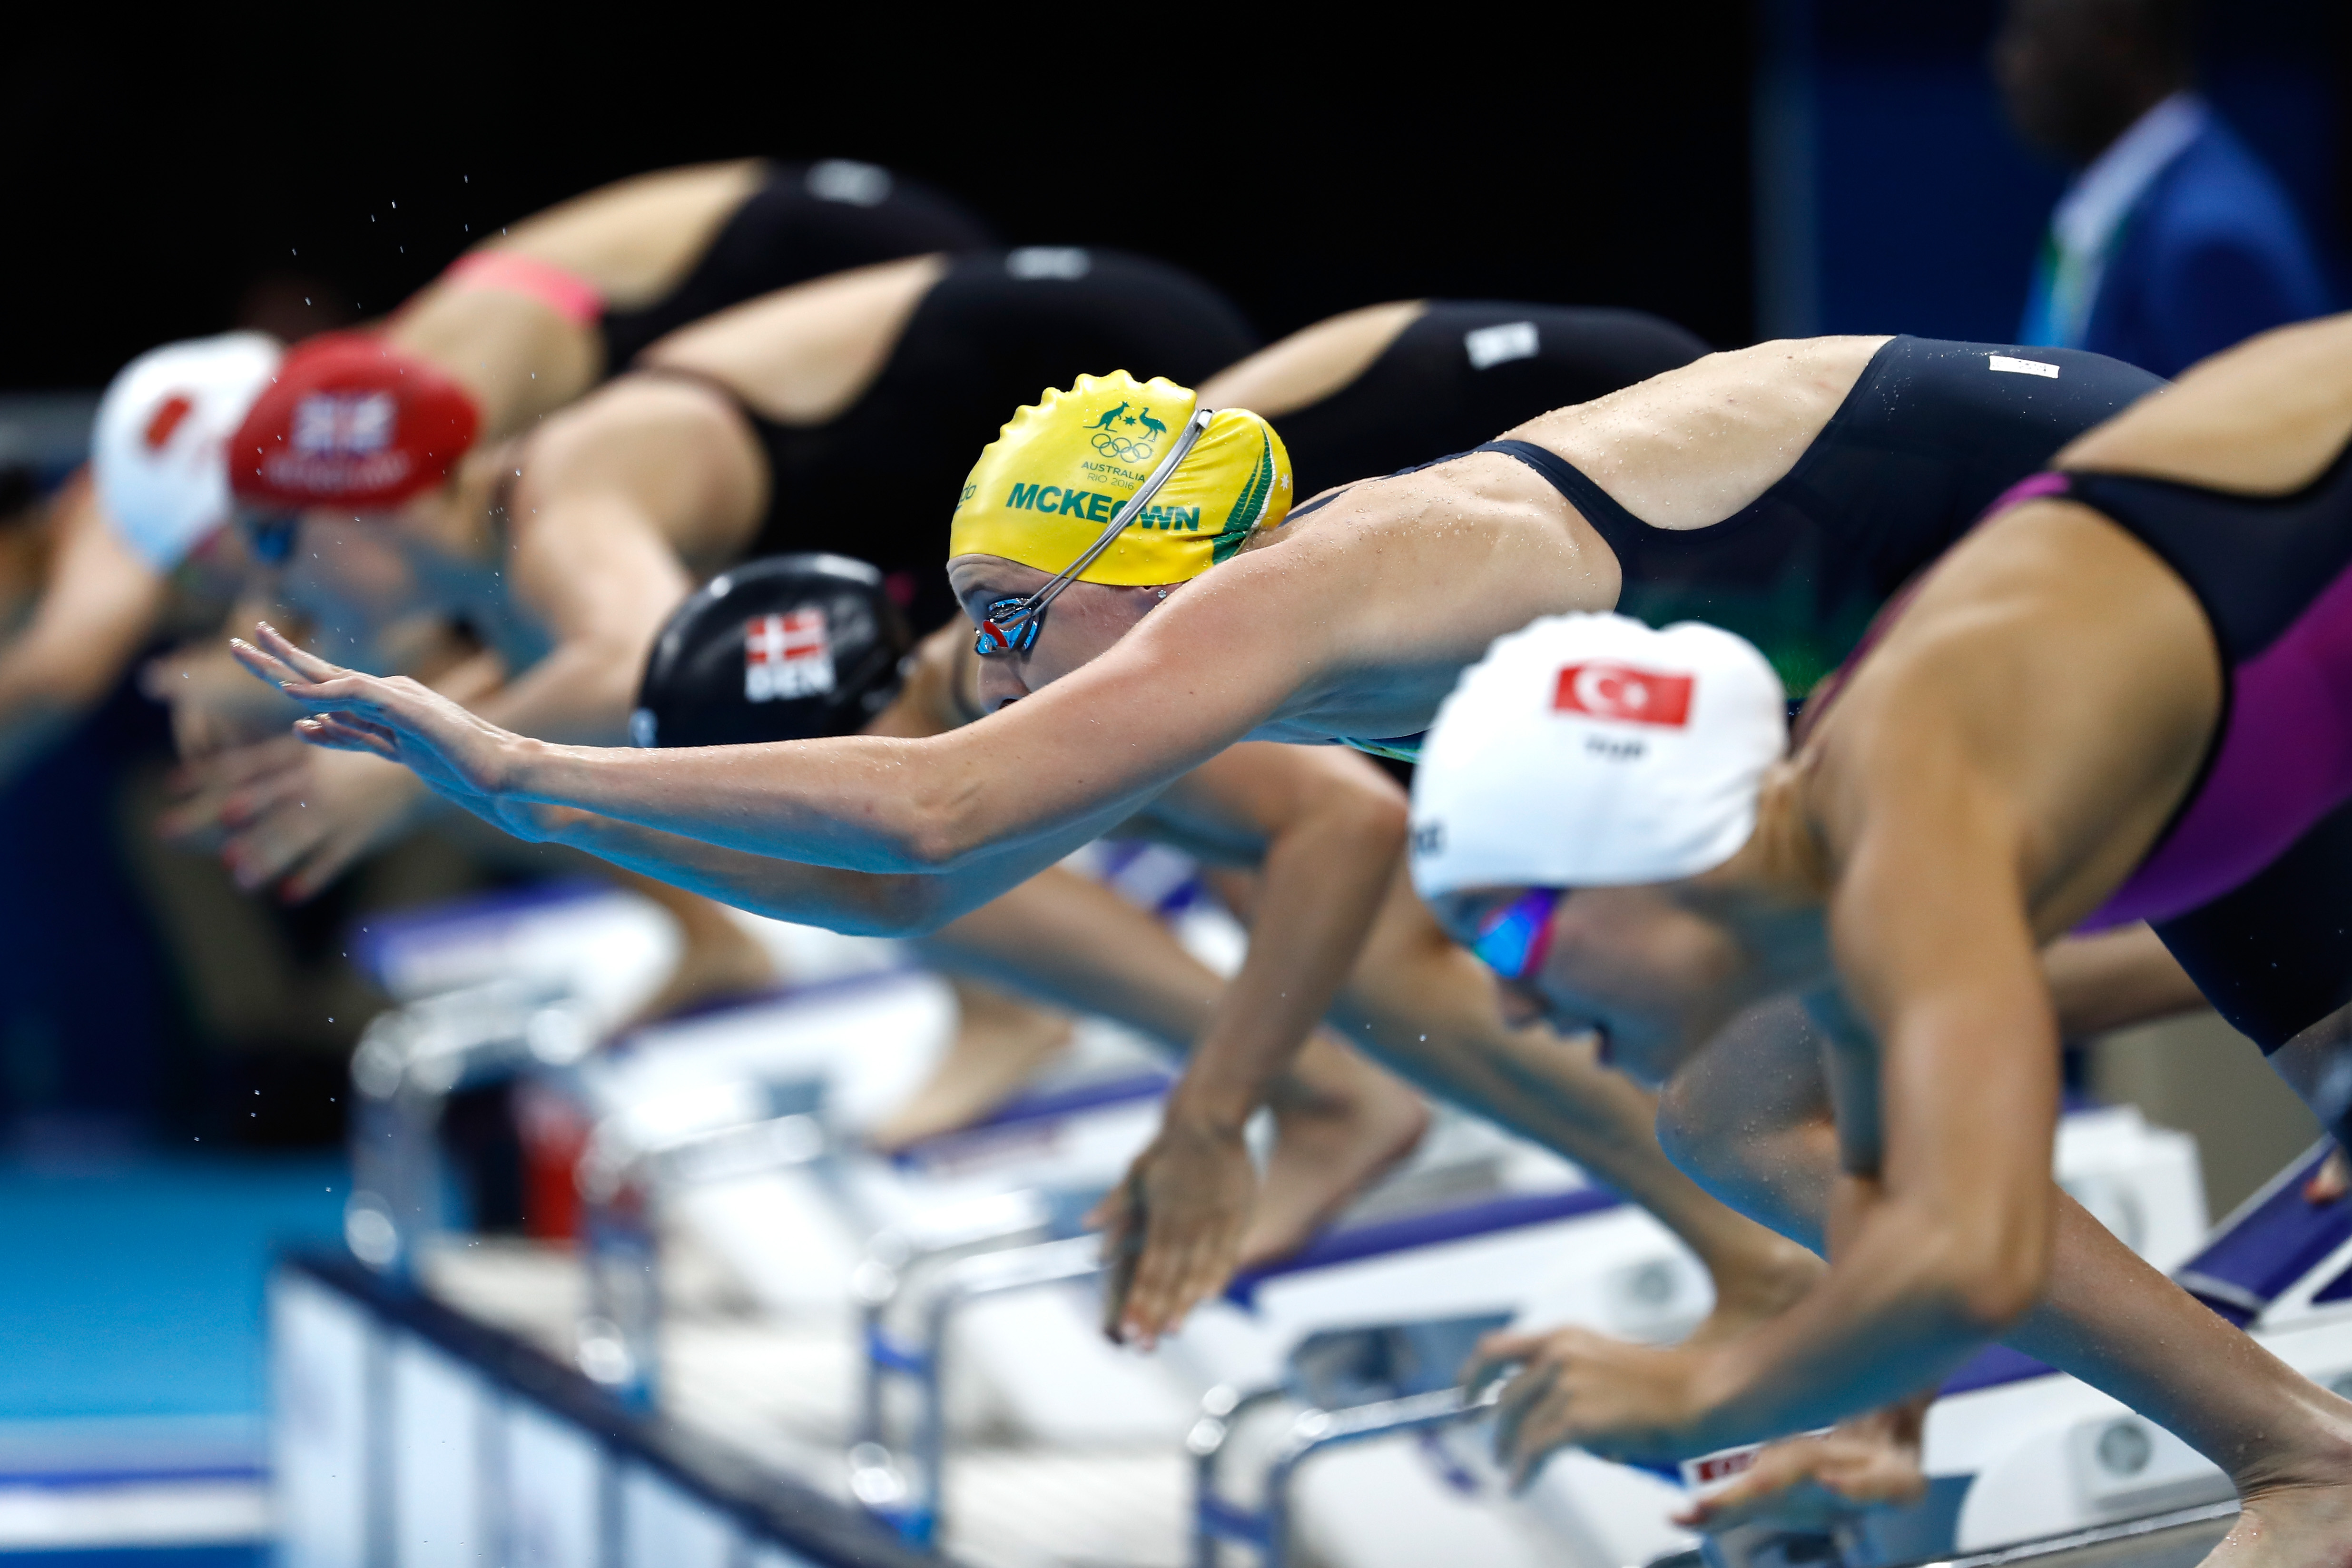 Olympics swimming Womens 200m Breaststroke final live stream Watch online 